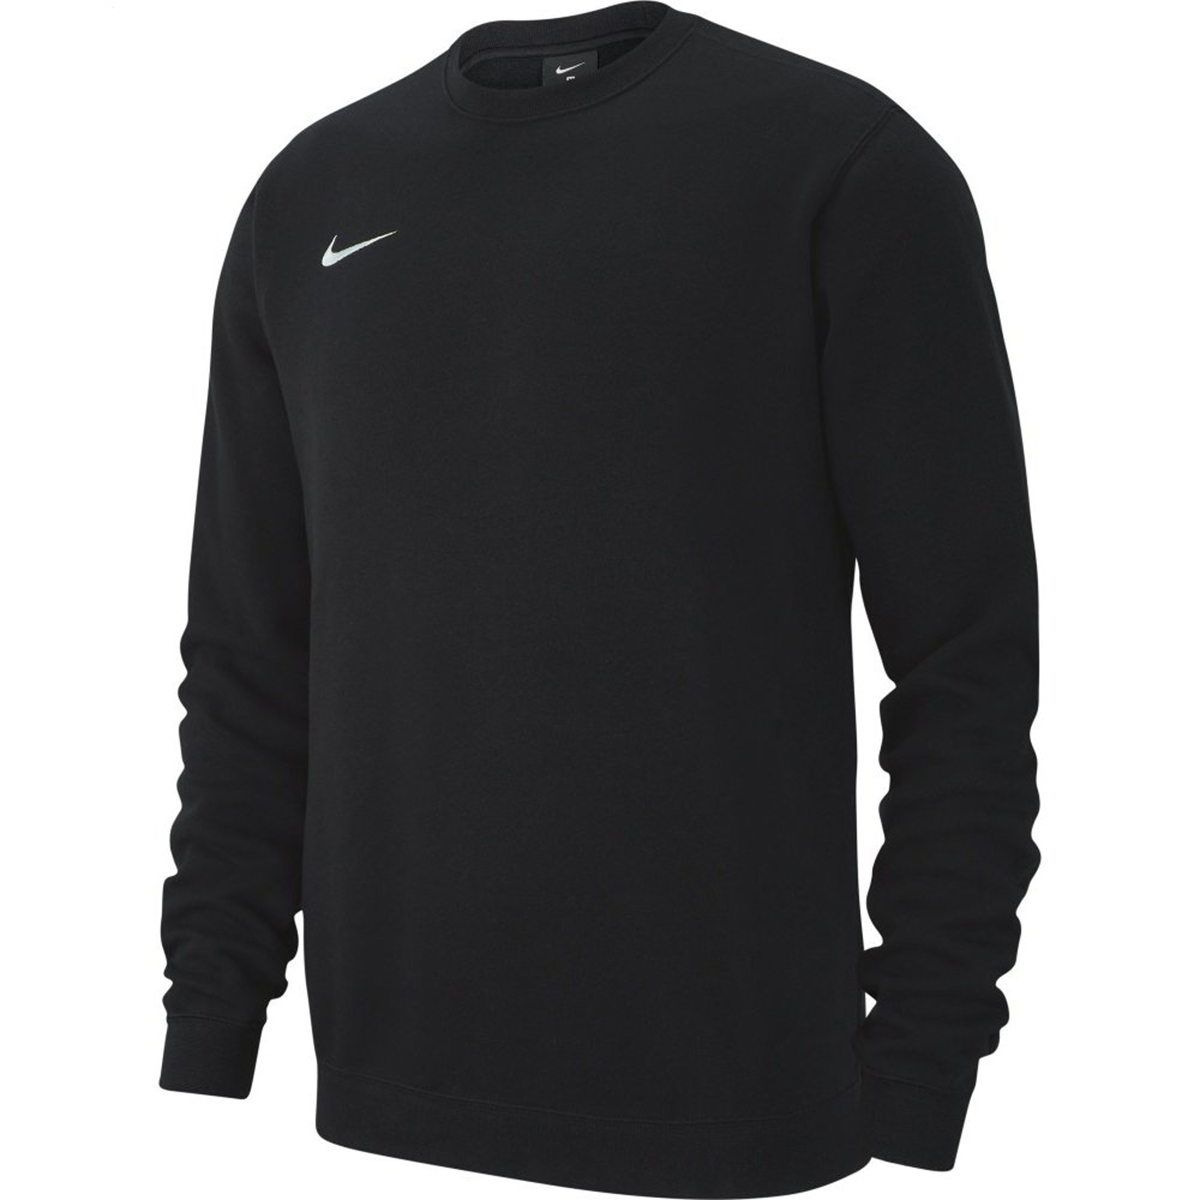 Nike Herren Sweatshirt TEAM CLUB 19 schwarz